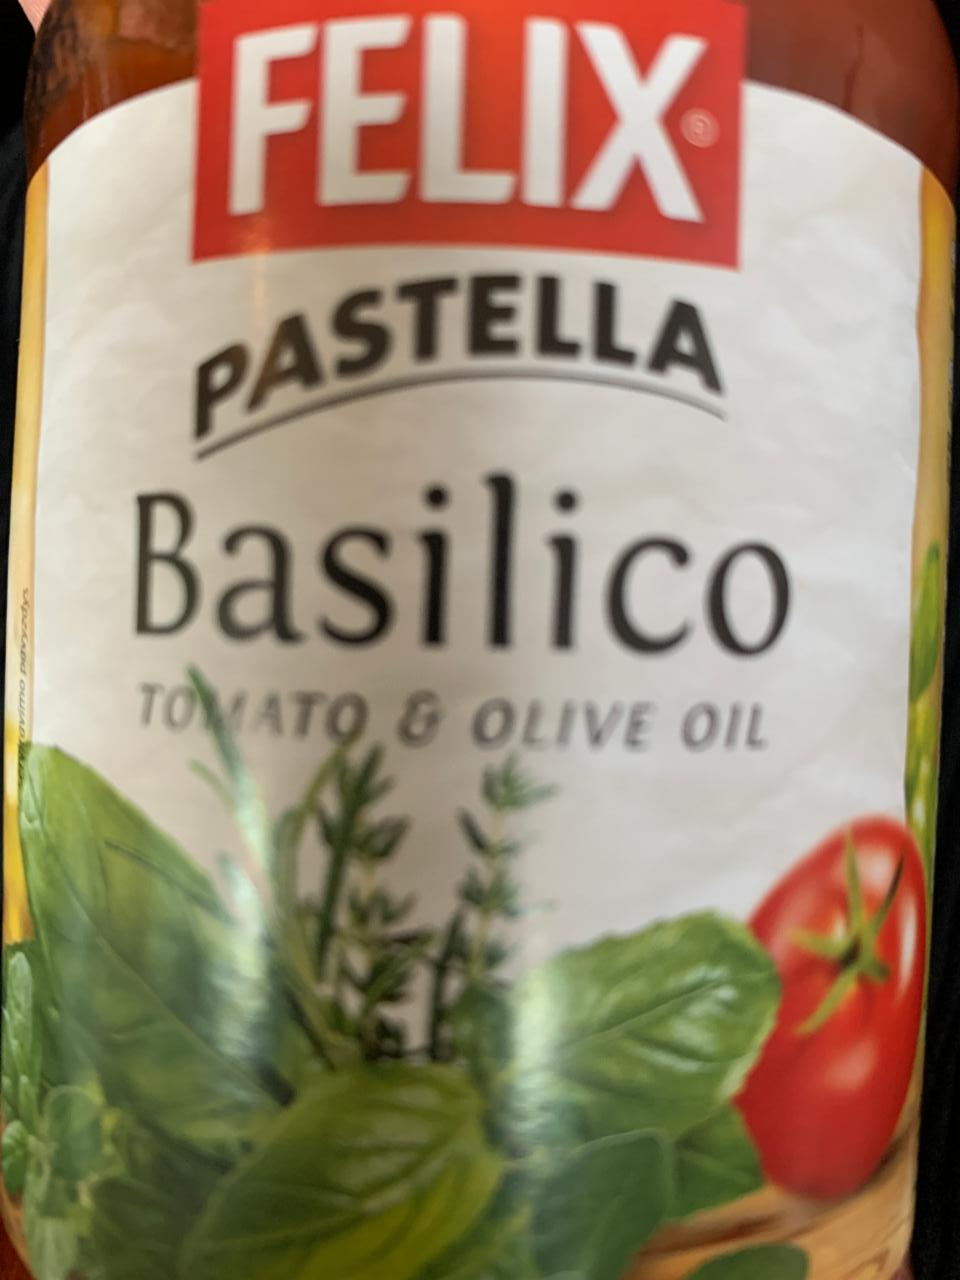 Fotografie - Basilico tomato & olive oil Pastella Felix